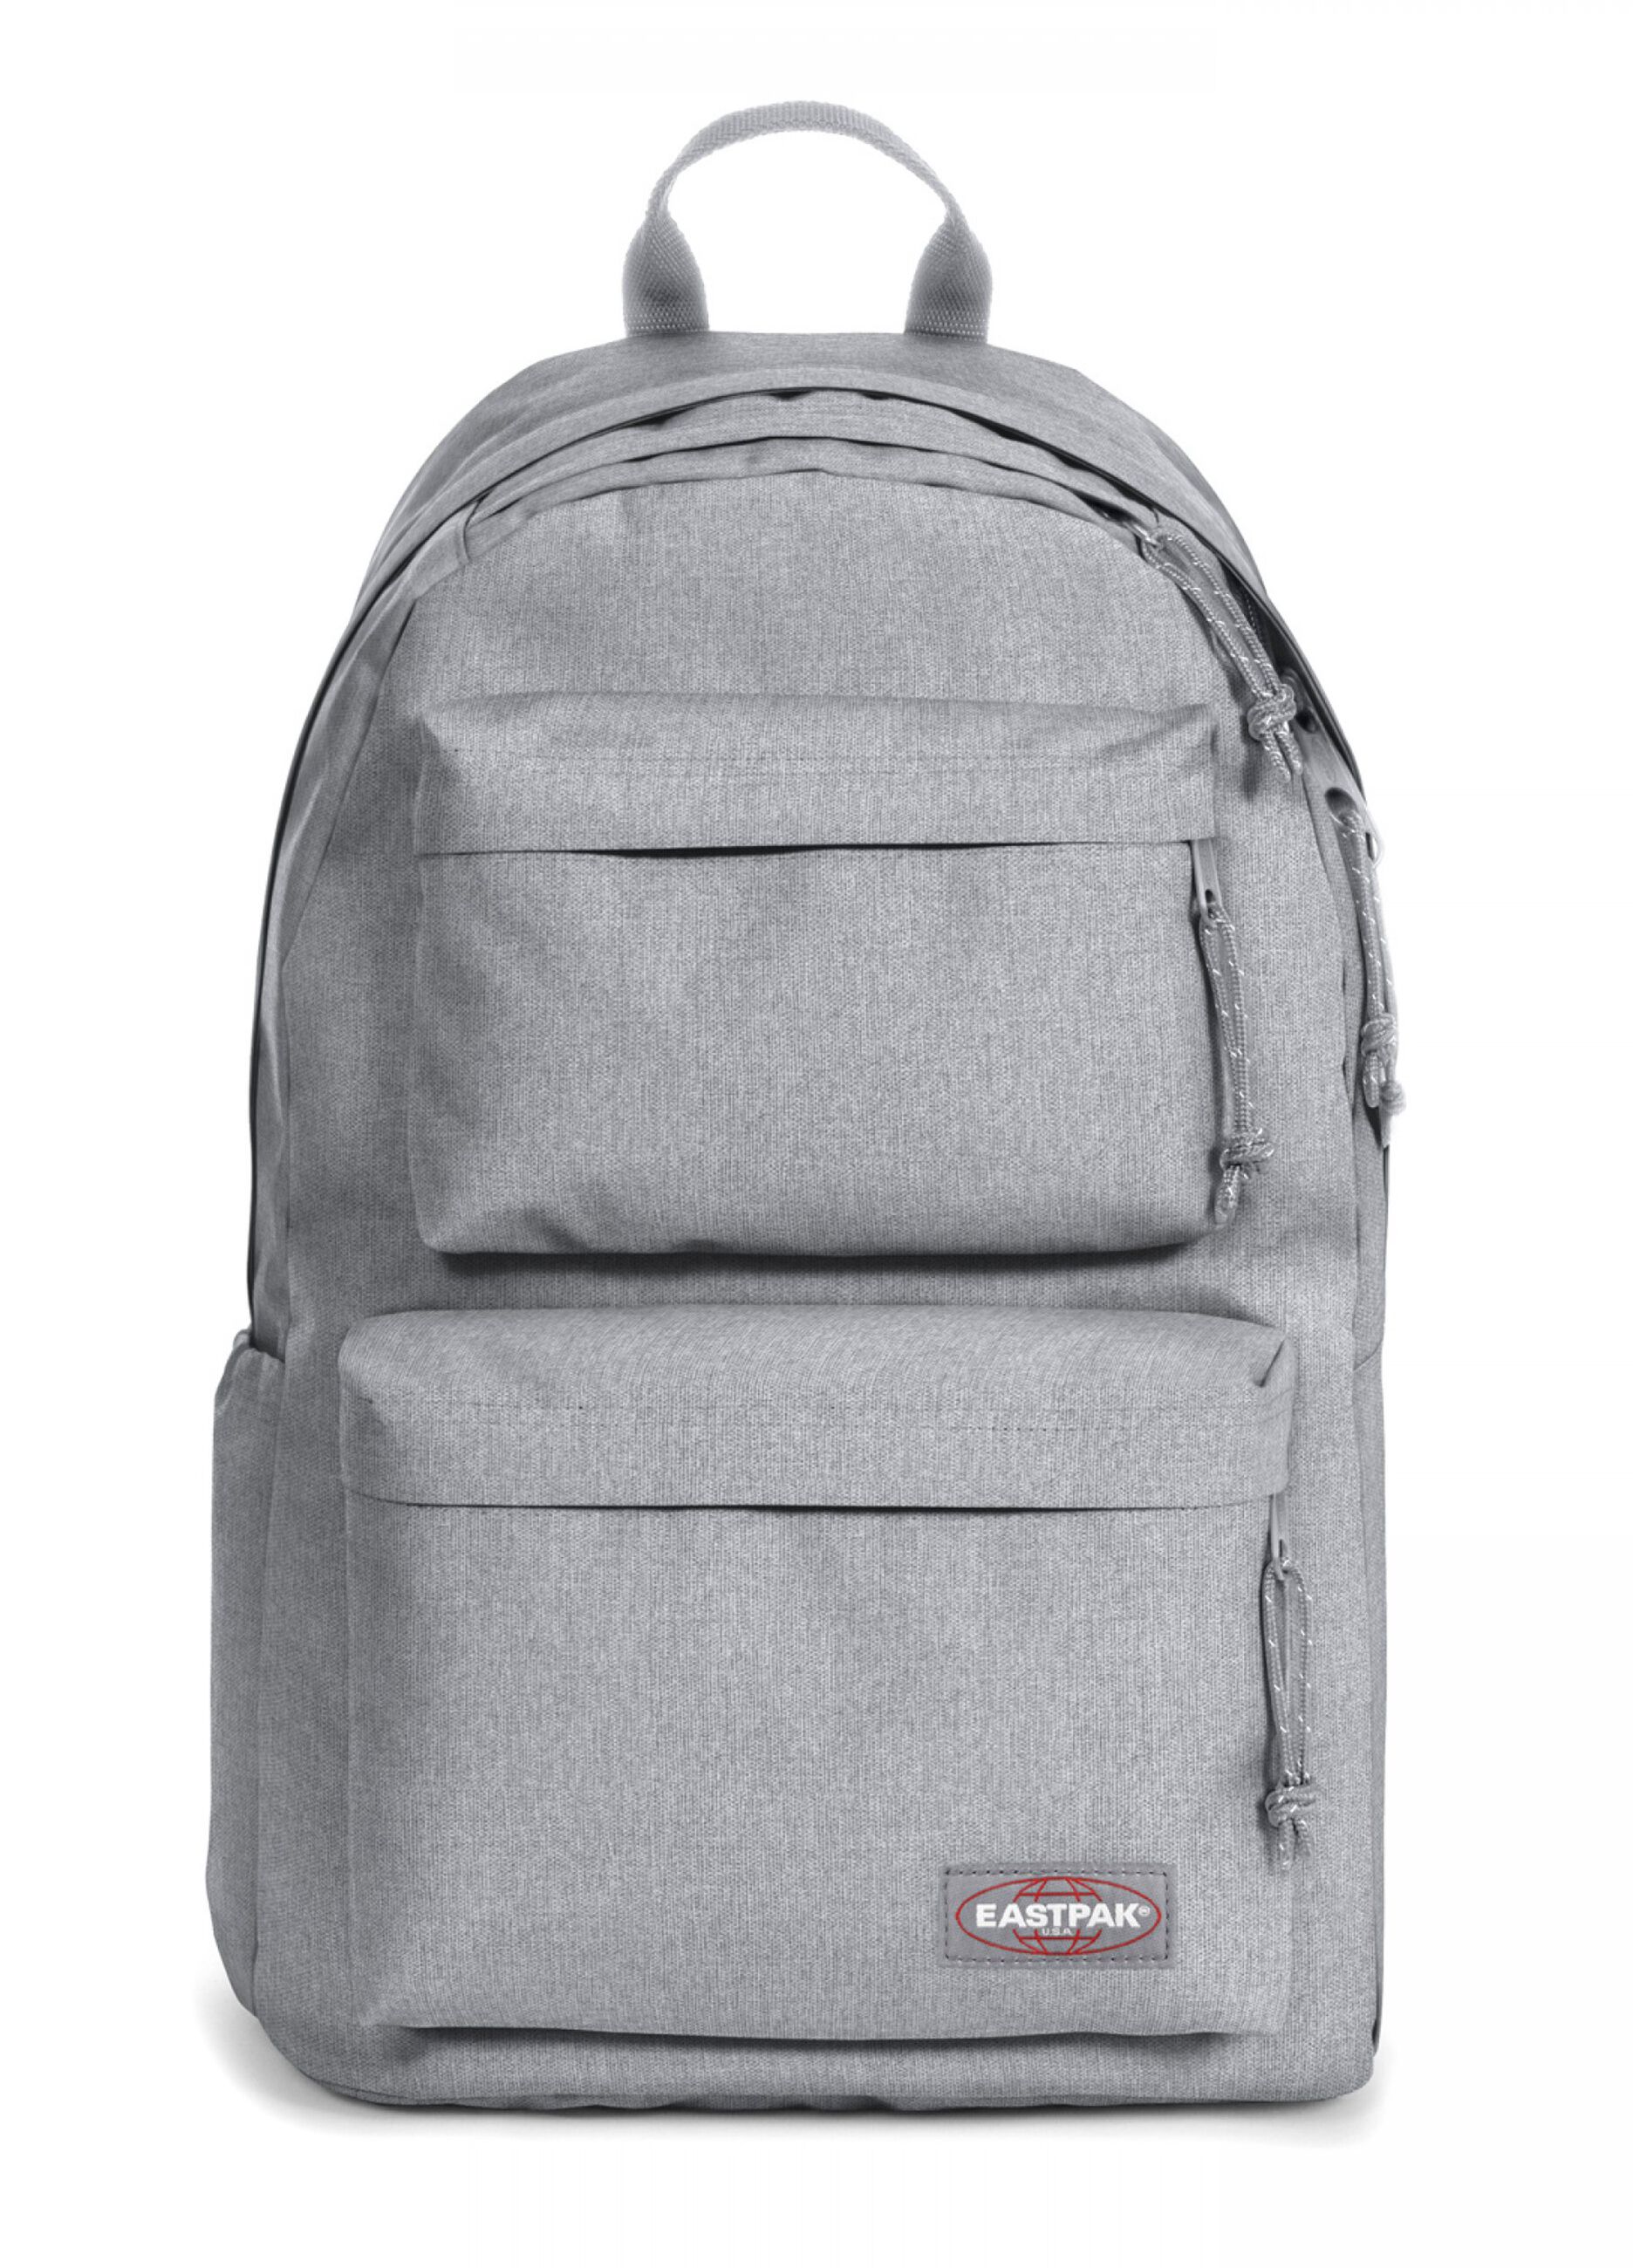 periodieke Bliksem Waakzaam EASTPAK Unisex's Light Grey Marl Eastpak backpack | OVS